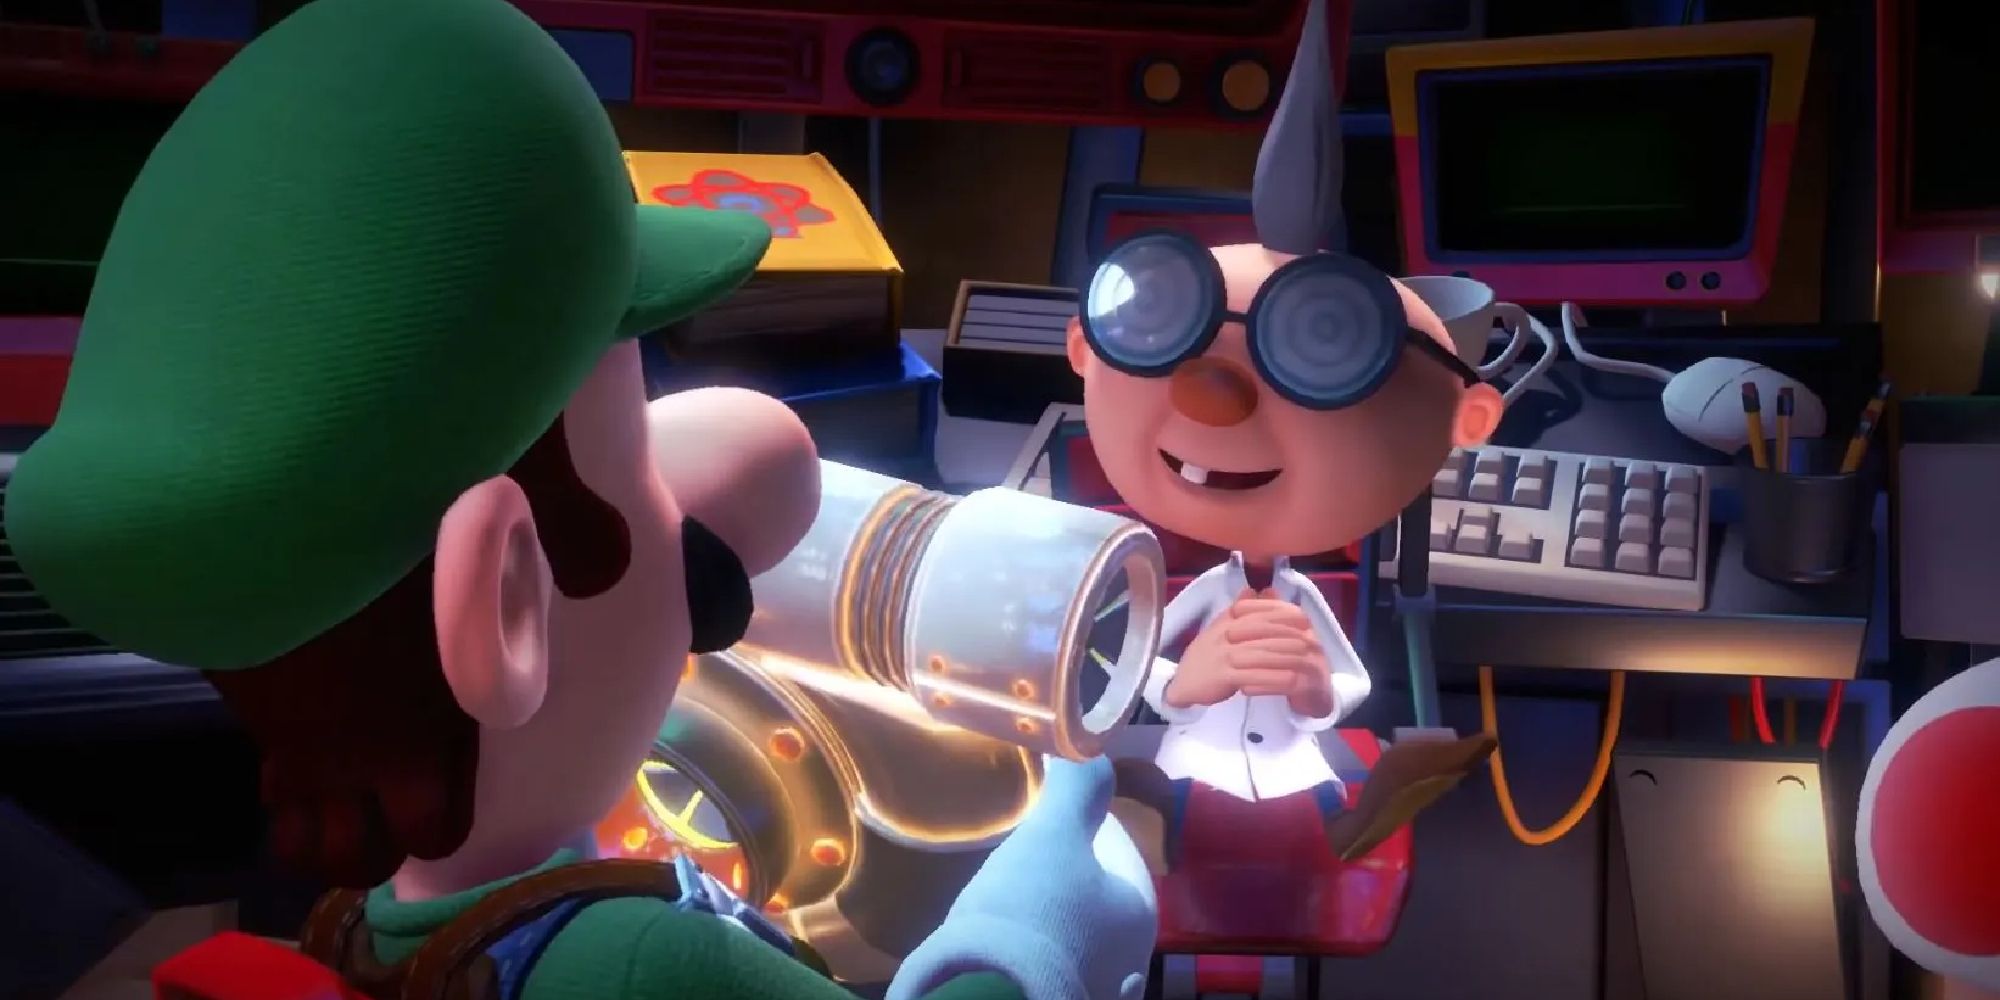 Professor E. Gadd gives Luigi a Poltergust upgrade in Luigi's Mansion 3